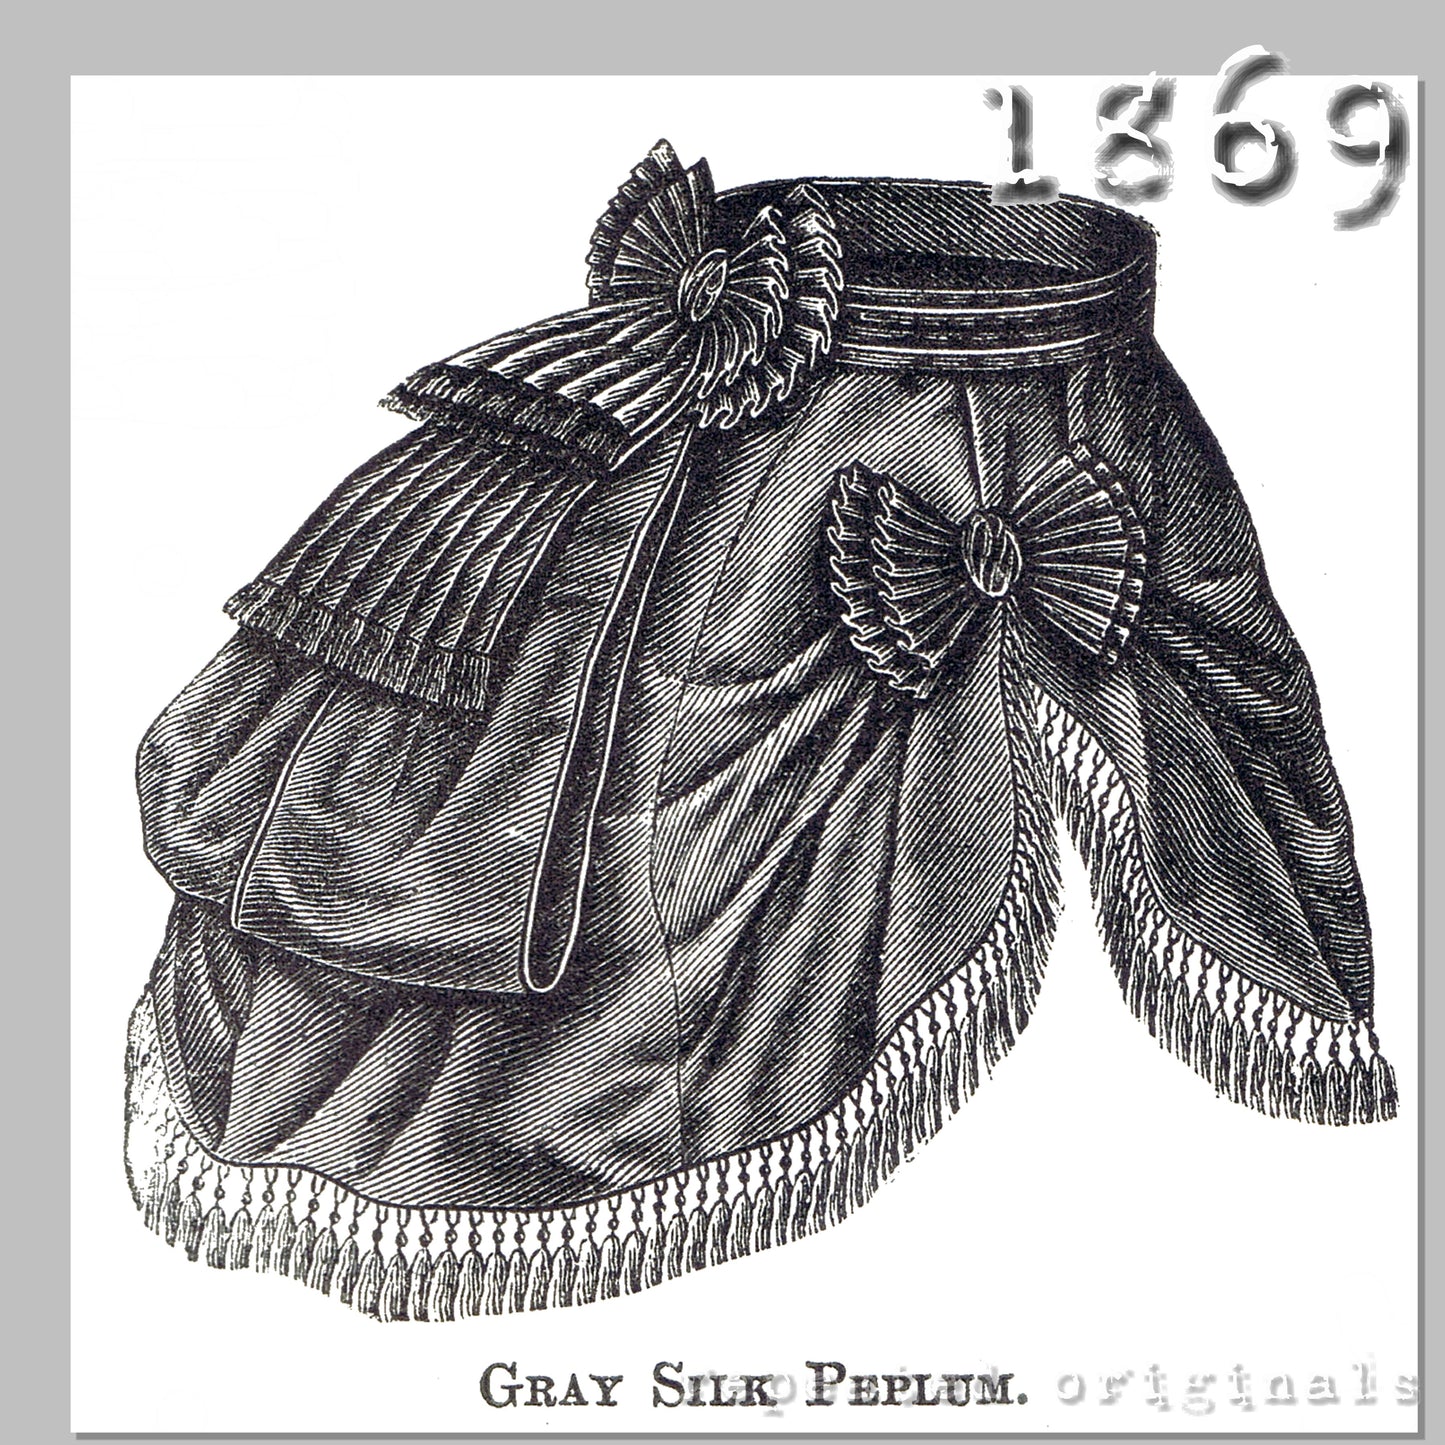 1869 Gray Silk Peplum Sewing Pattern - INSTANT DOWNLOAD PDF